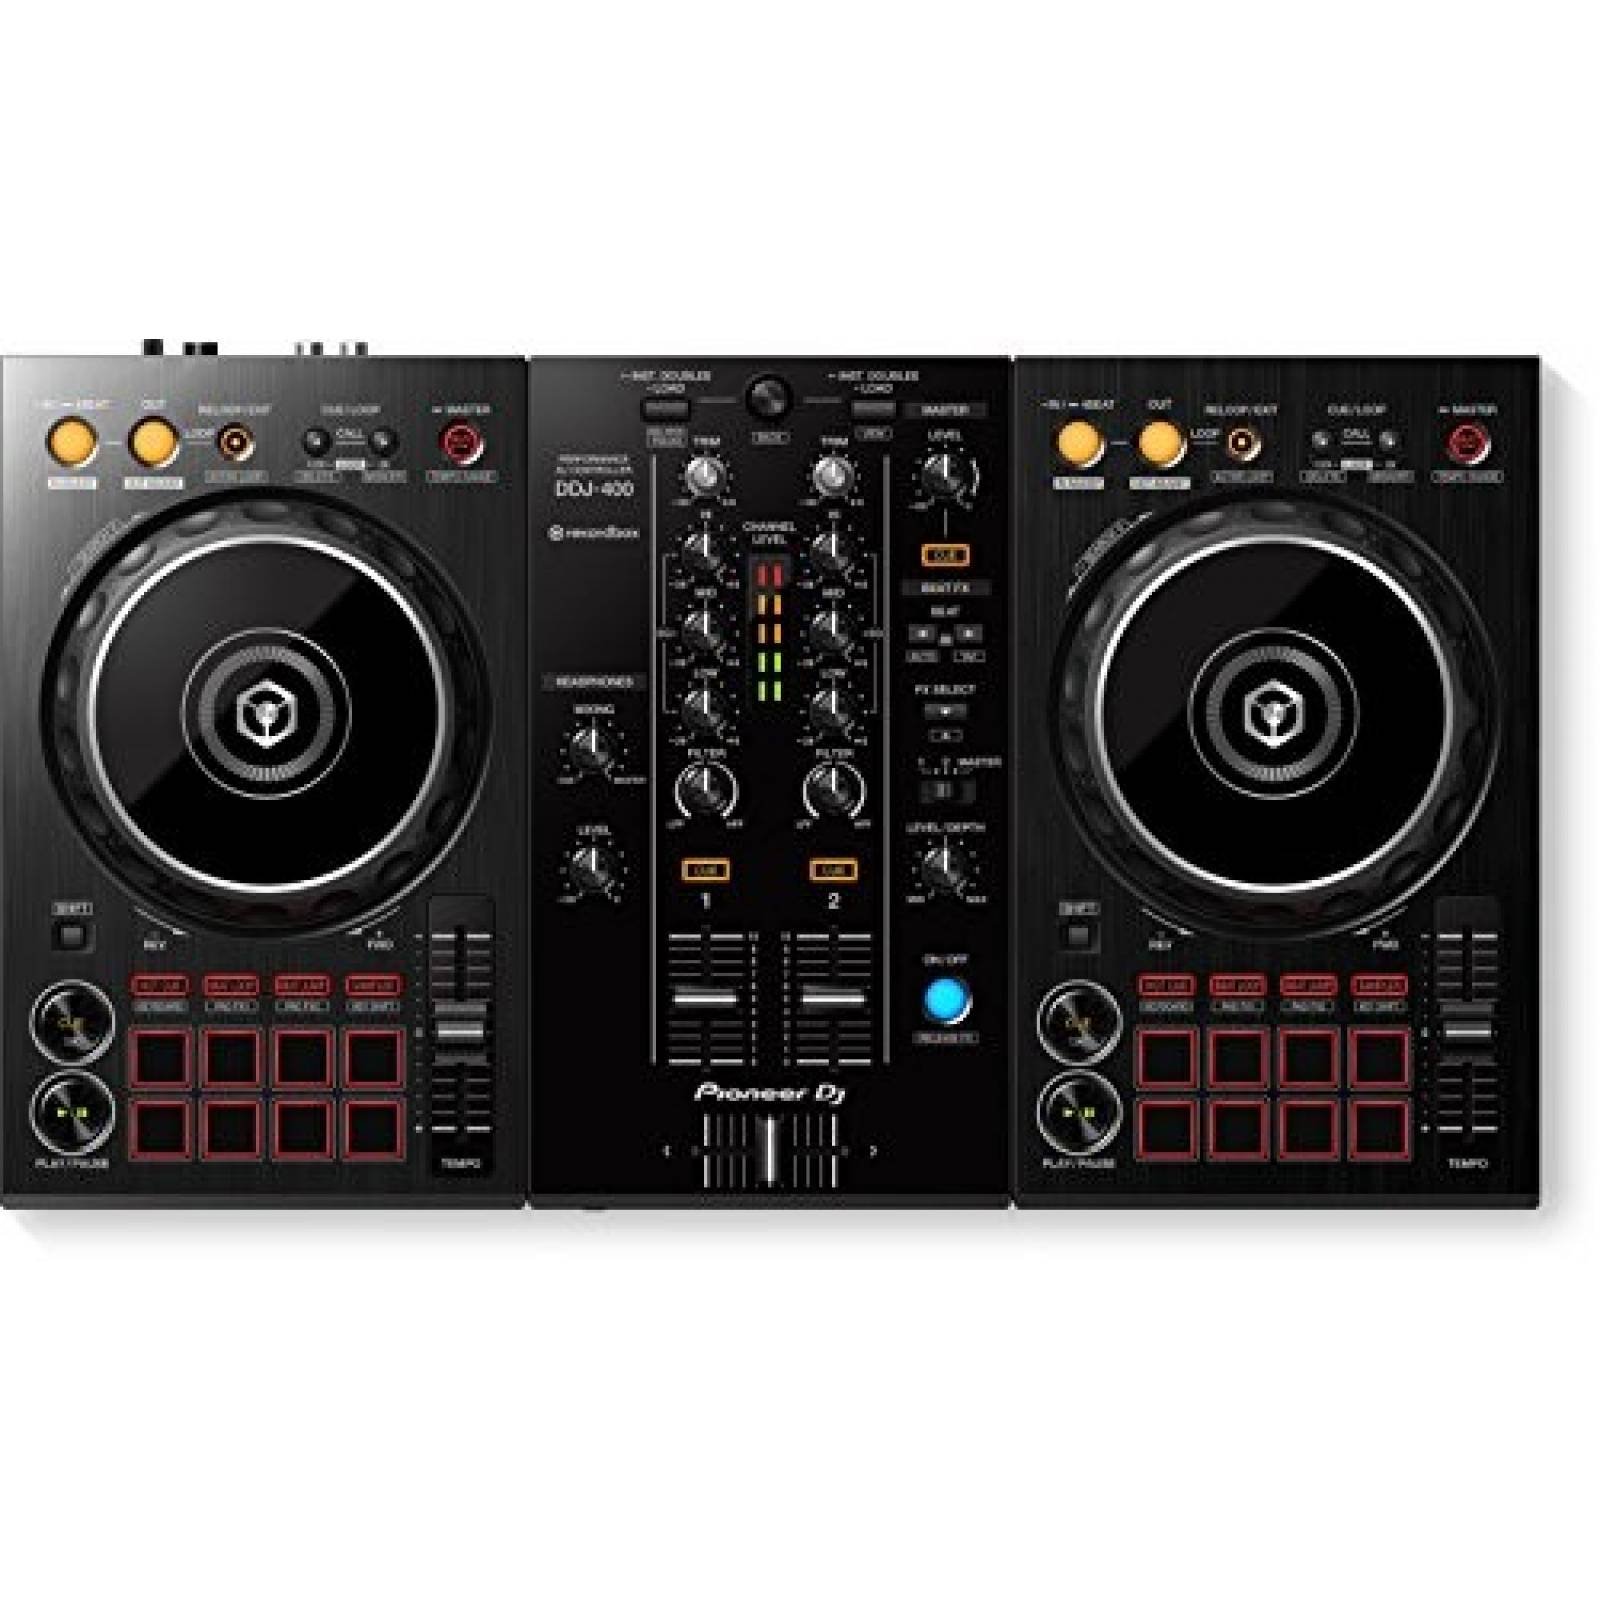 Control de DJ Pioneer DJ DDJ 400 USB 2 canales -negro